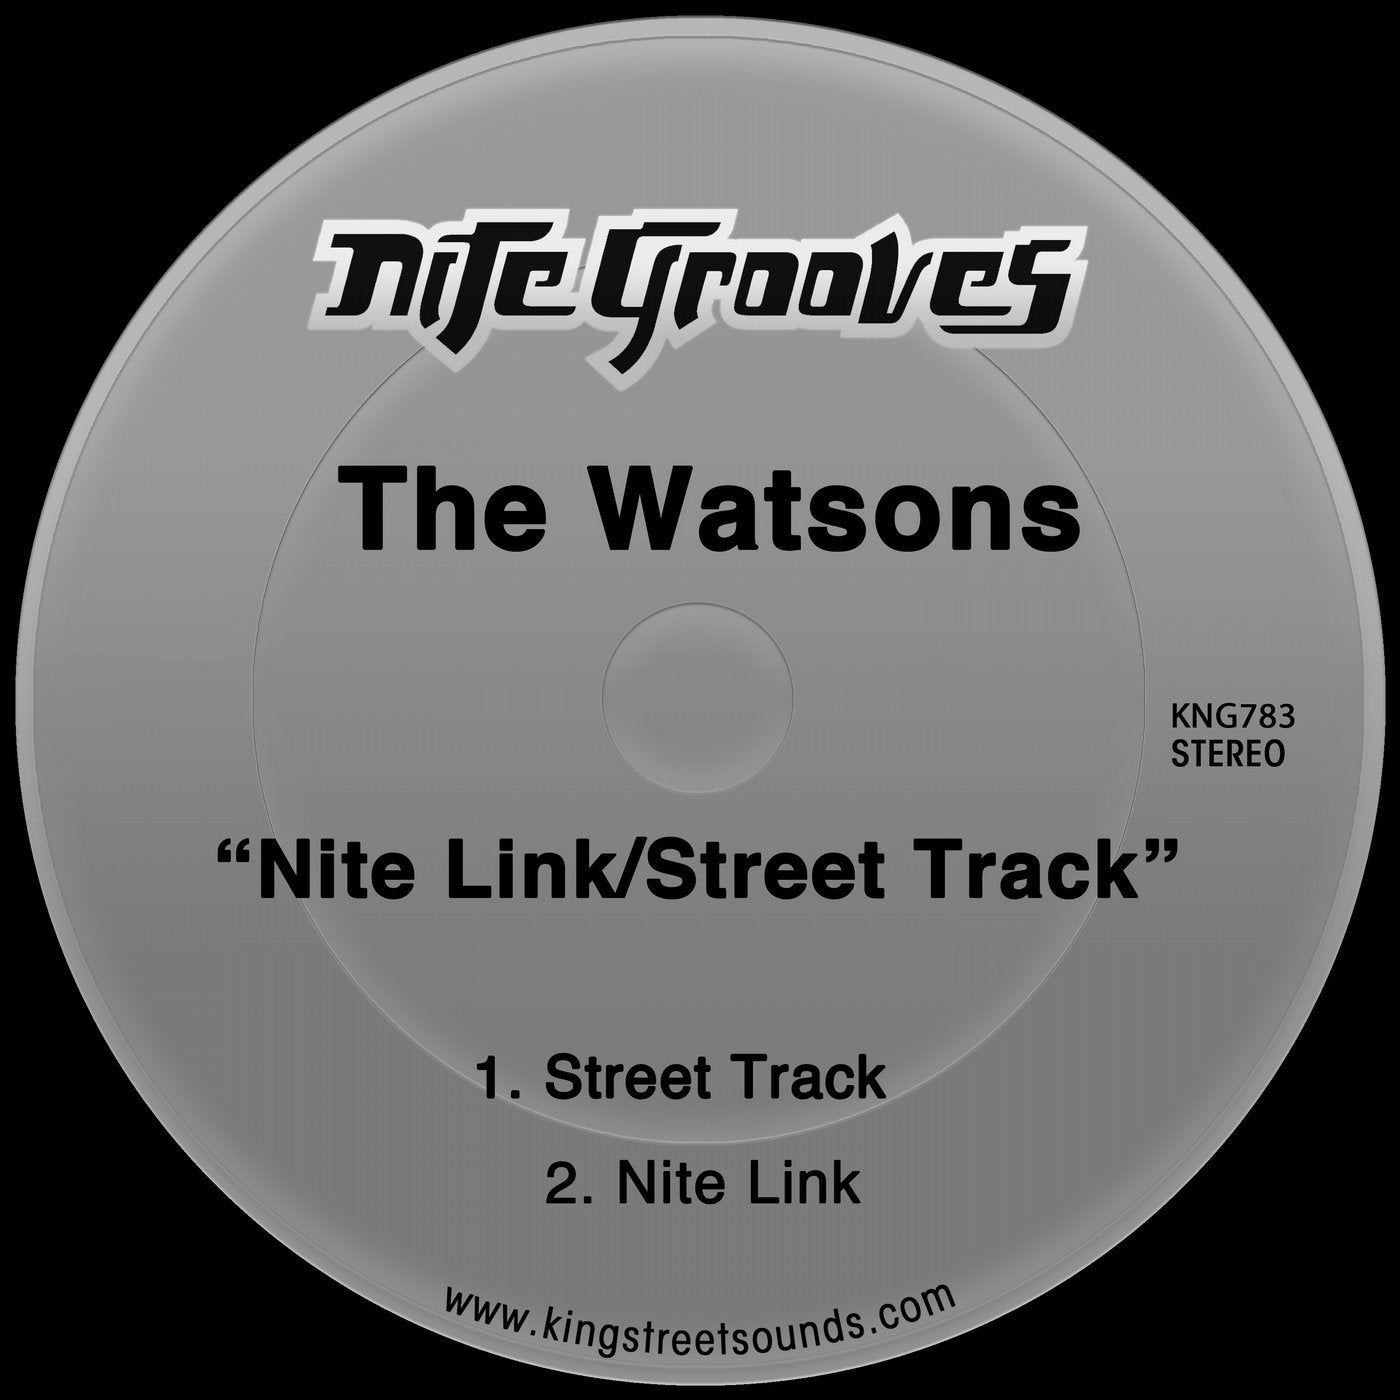 Nite Link / Street Track